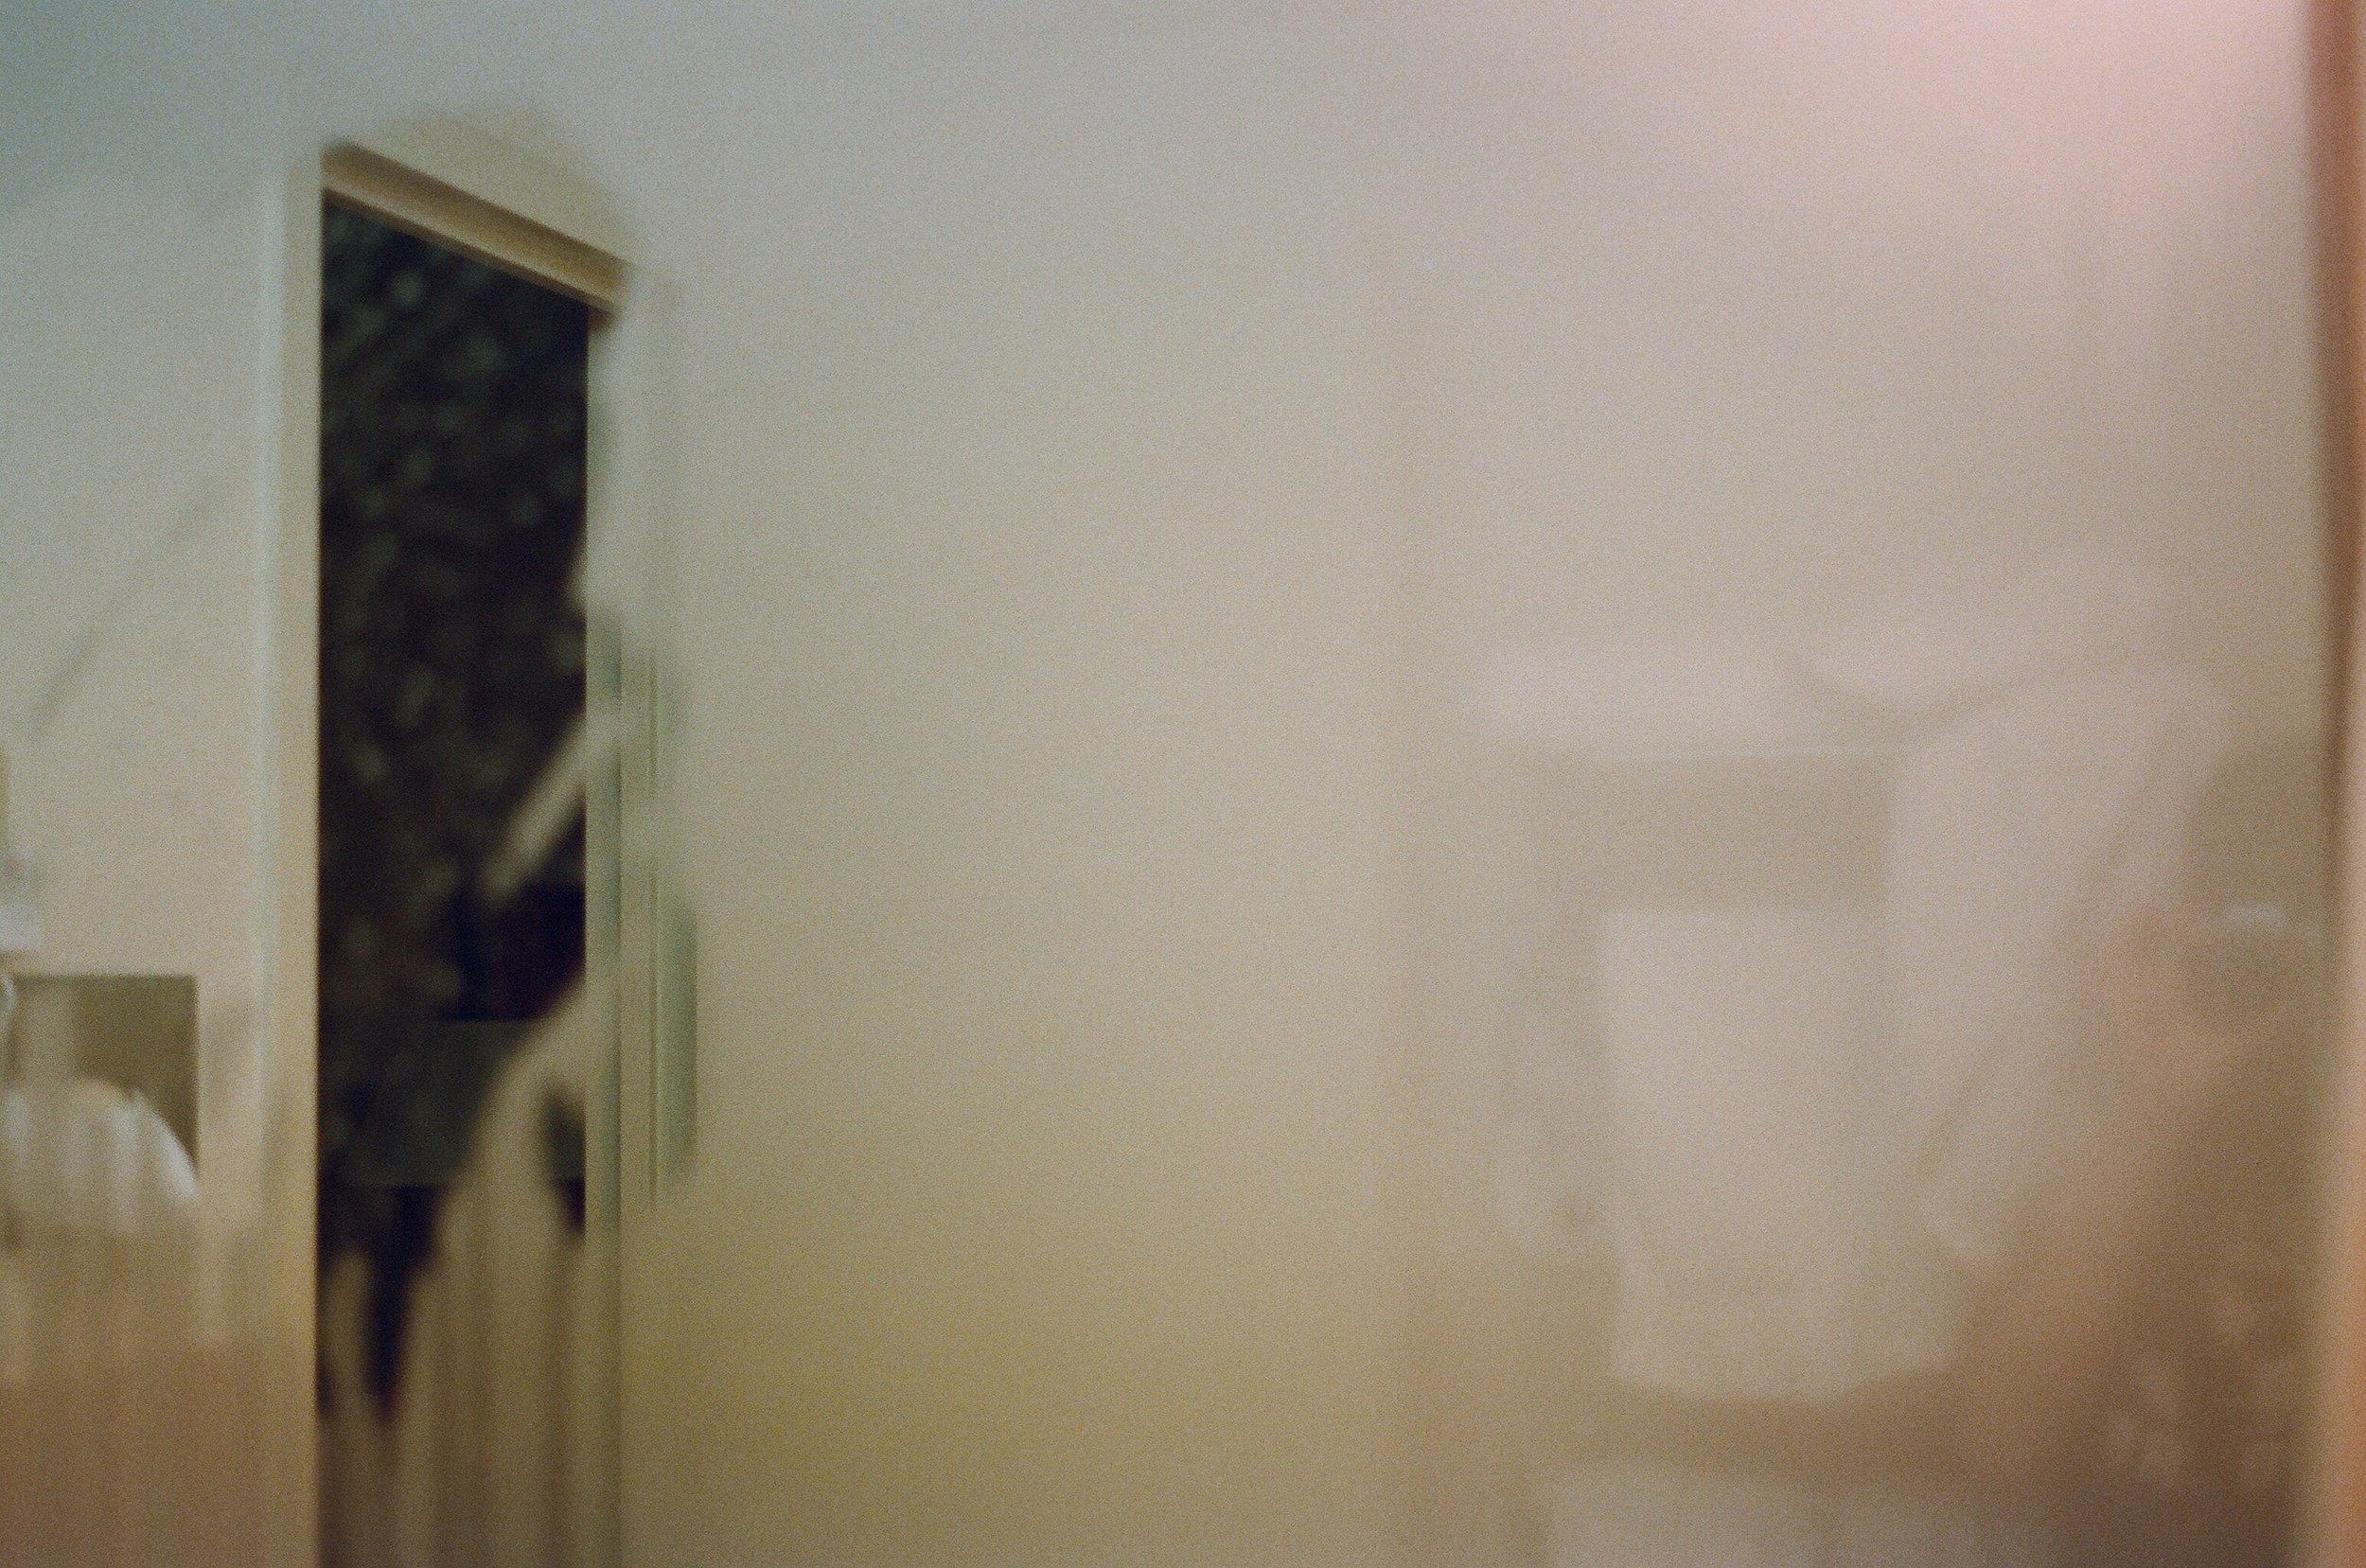   Room , 2014  digital image  35mm    